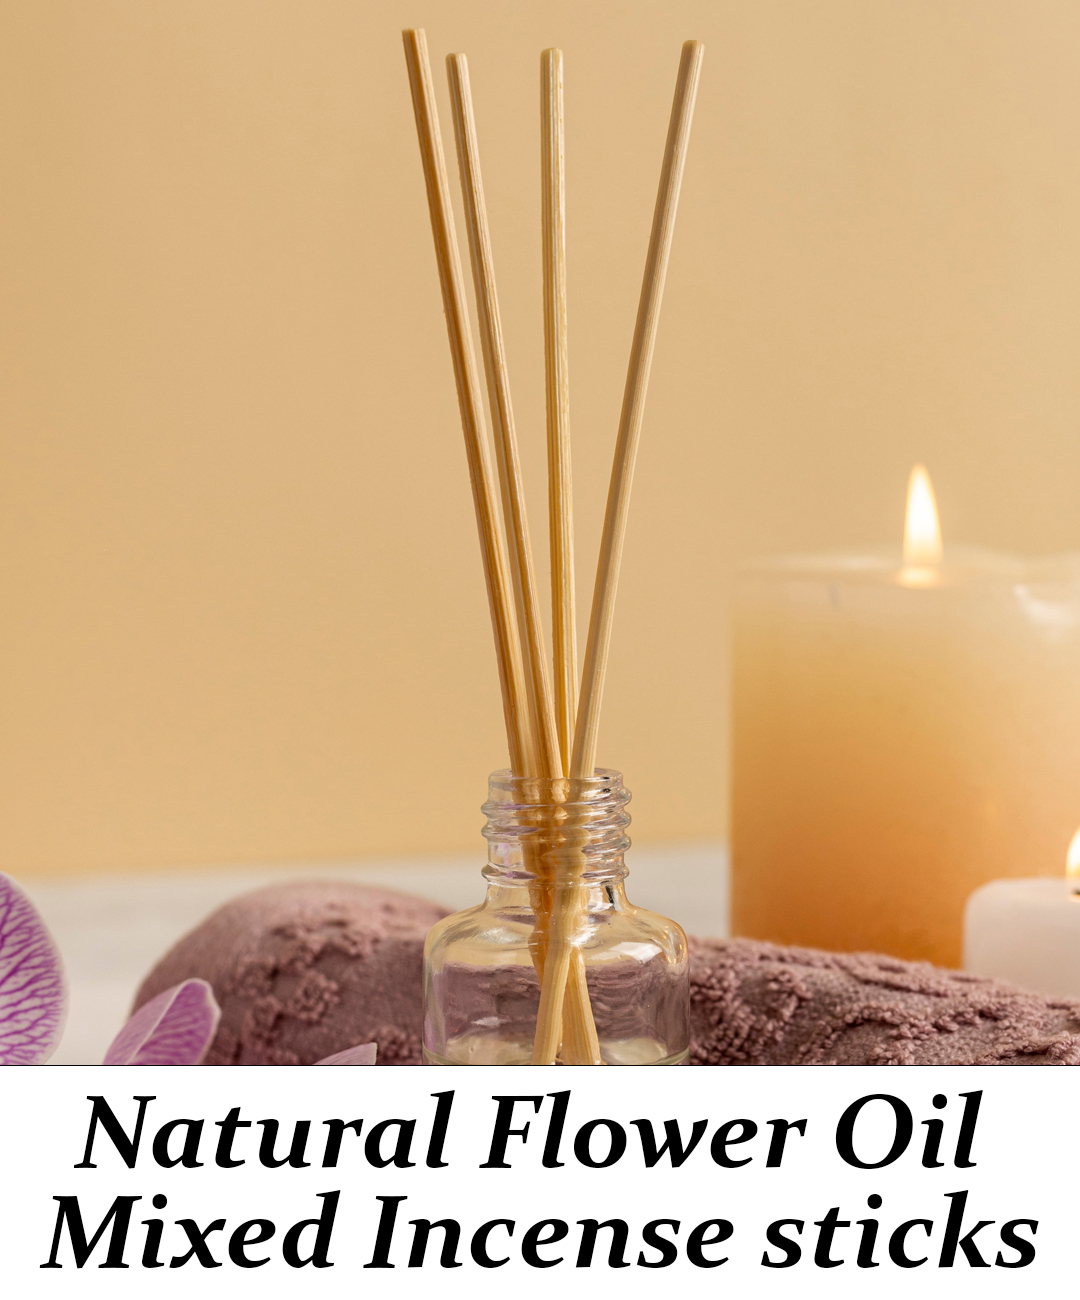 Natural Flower Oil Mixed Incense Sticks